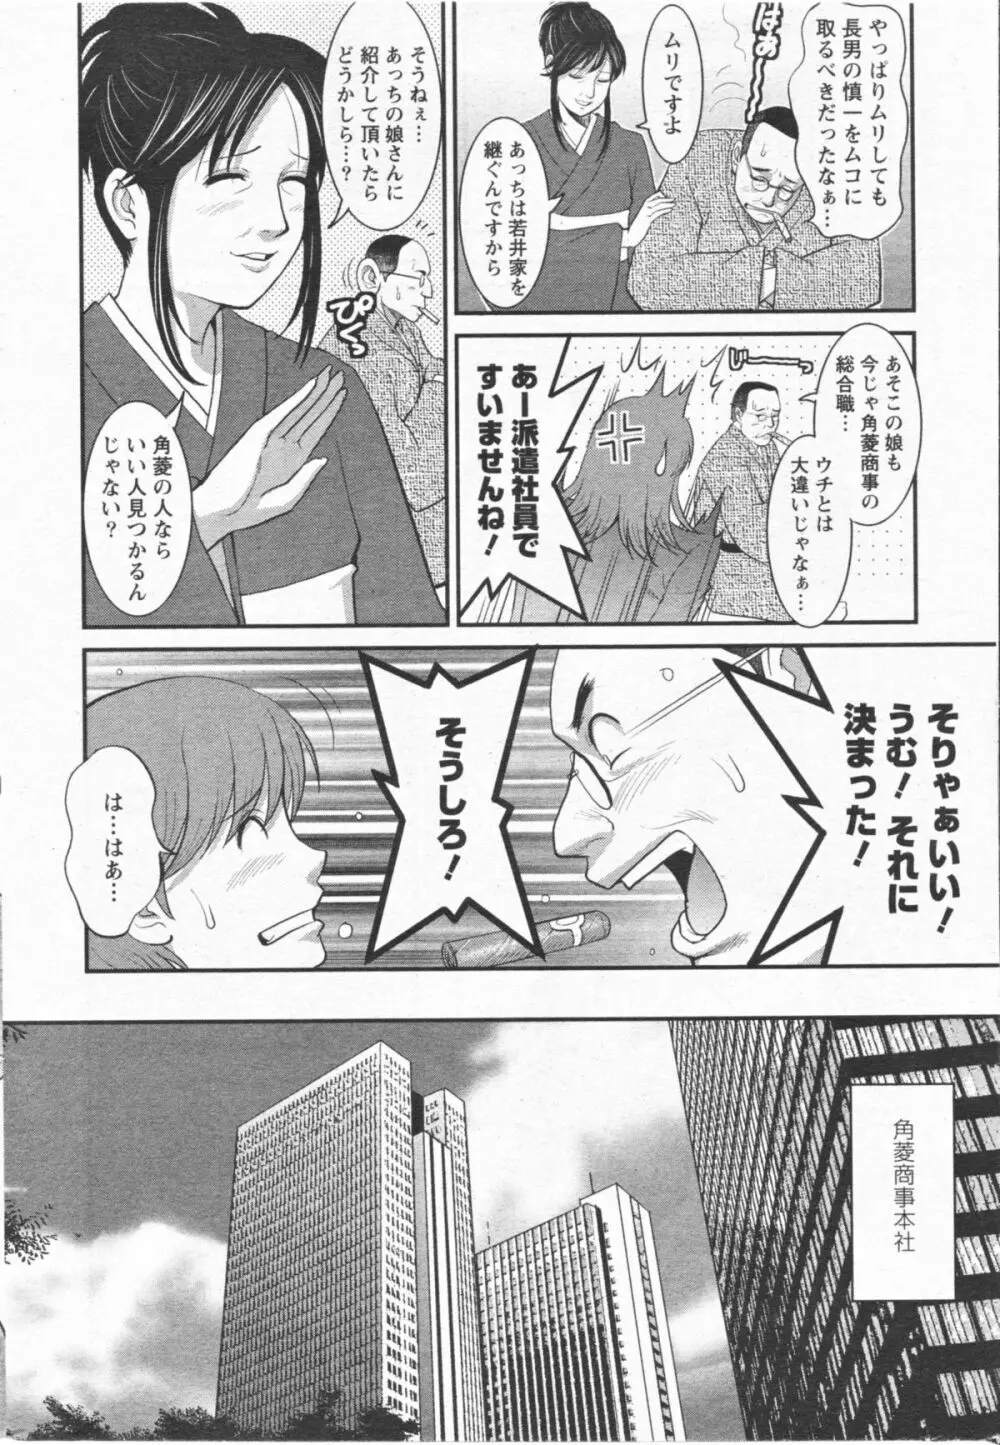 Haken no Muuko San 11 7ページ